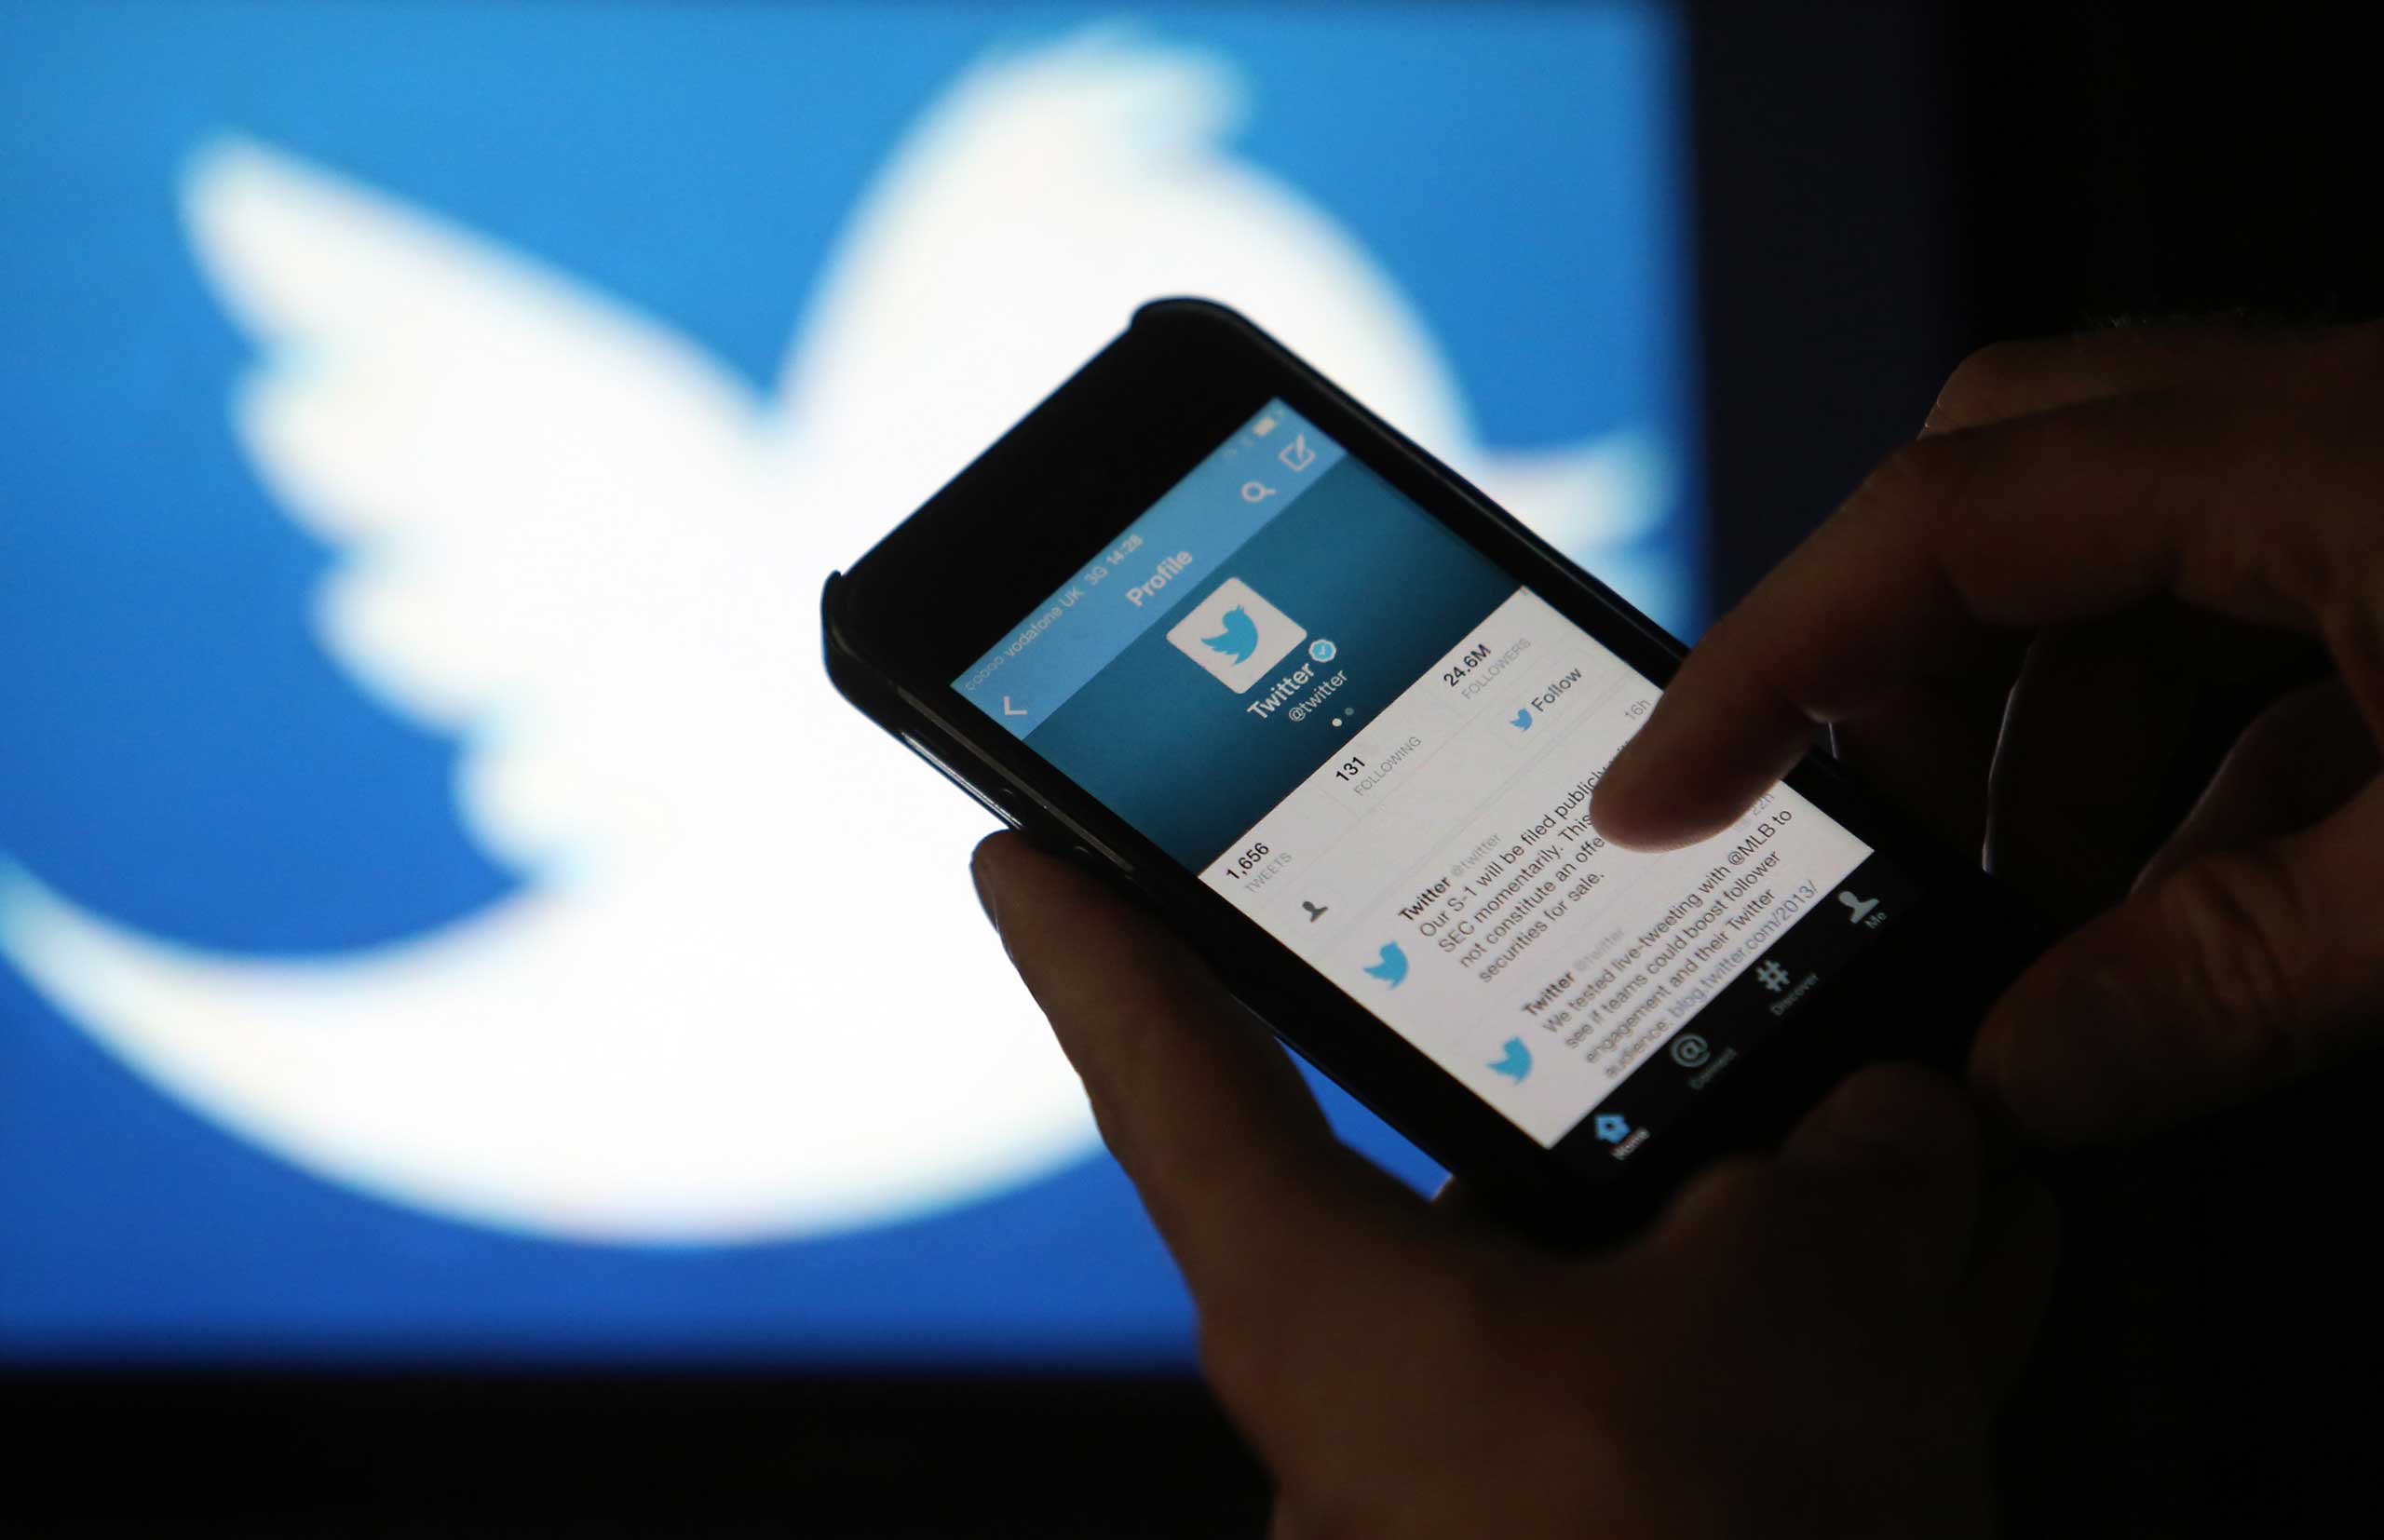 Twitter's IPO Filing Implies $12.8 Billion Value Amid Growth